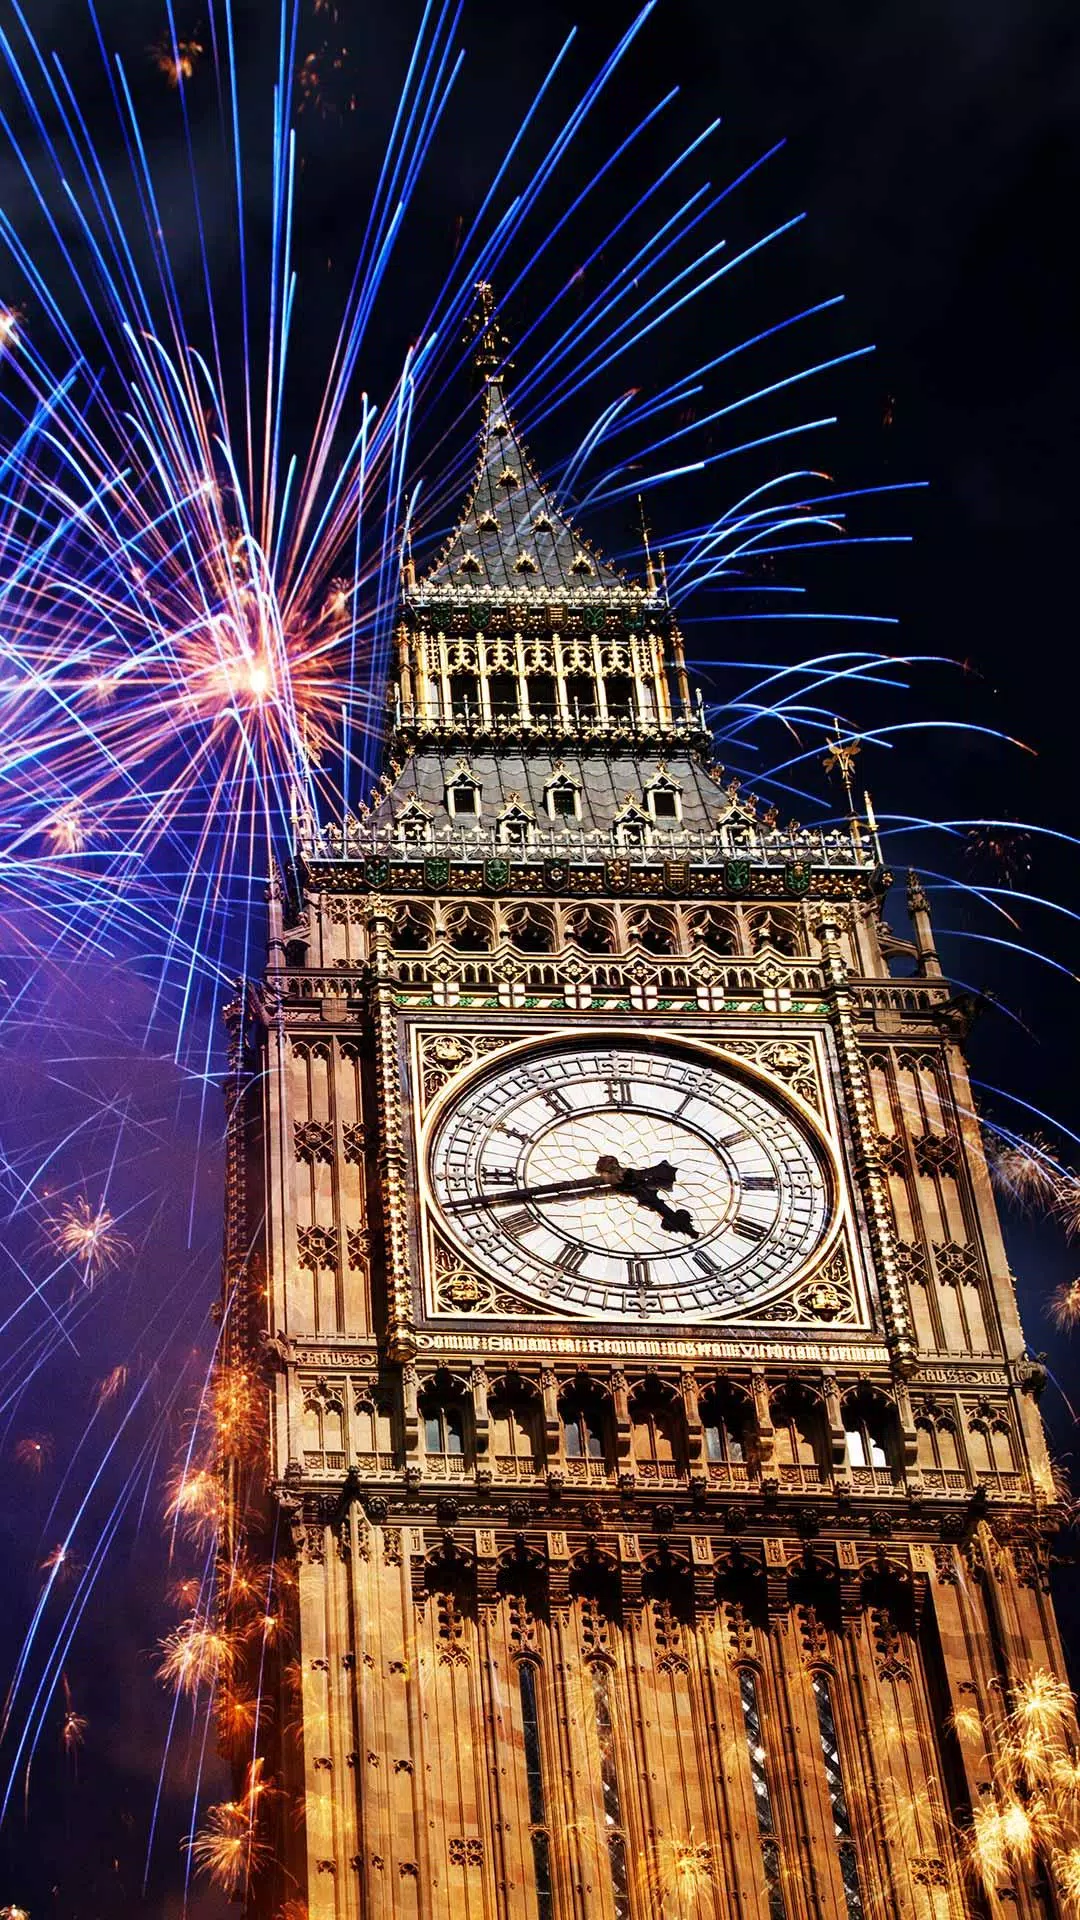 Fireworks Live Wallpaper APK for Android Download